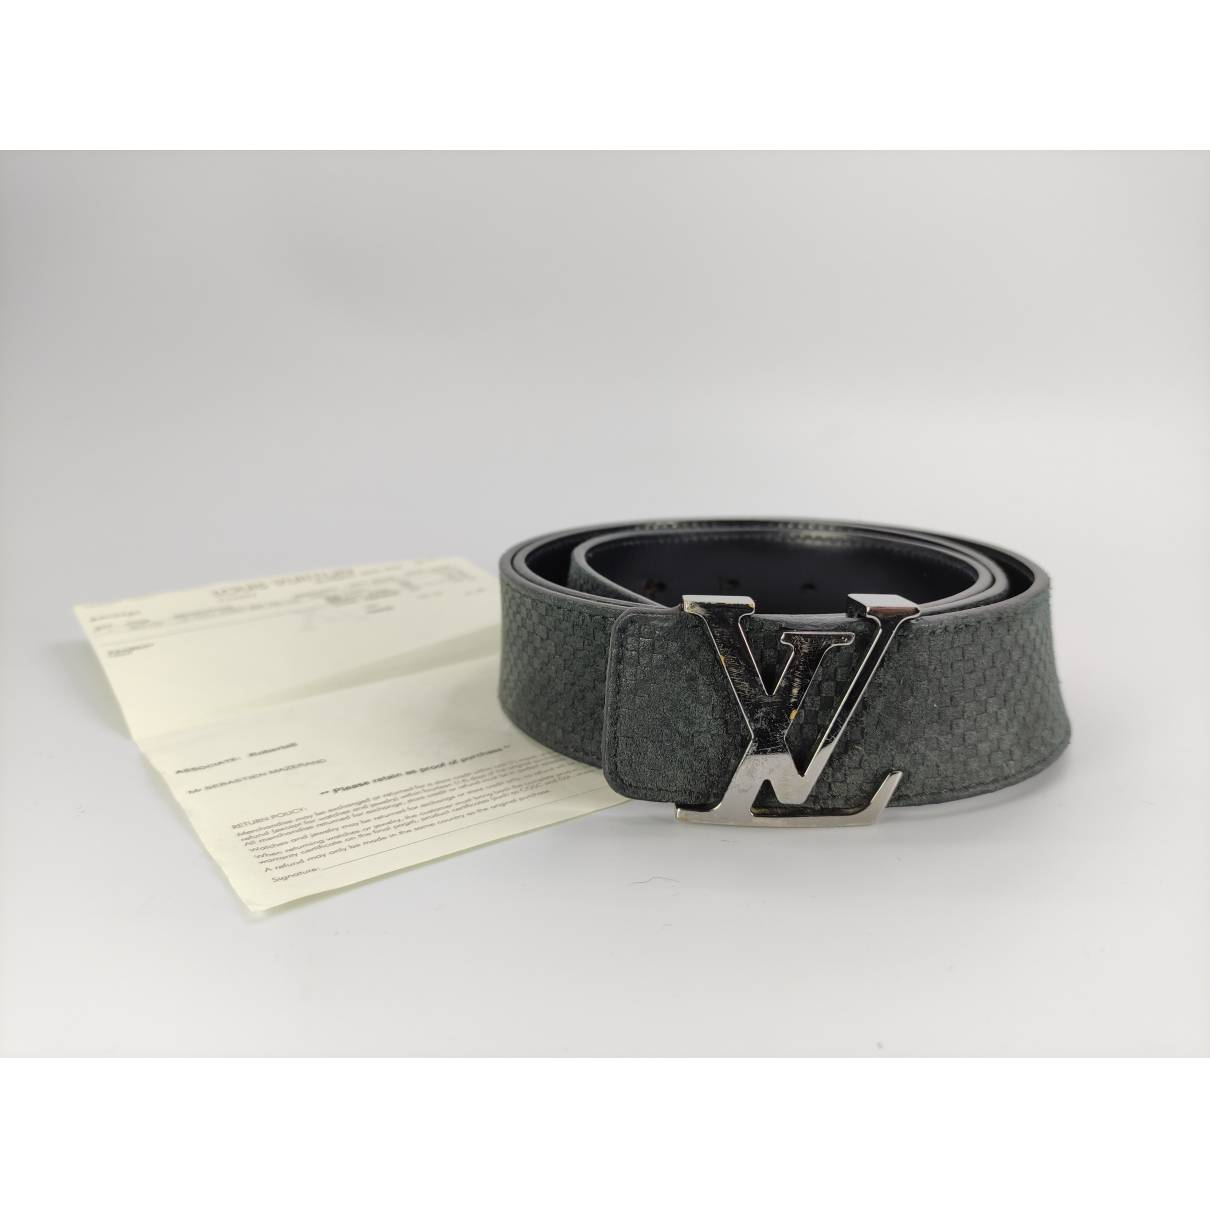 Initiales leather belt Louis Vuitton Khaki size L international in